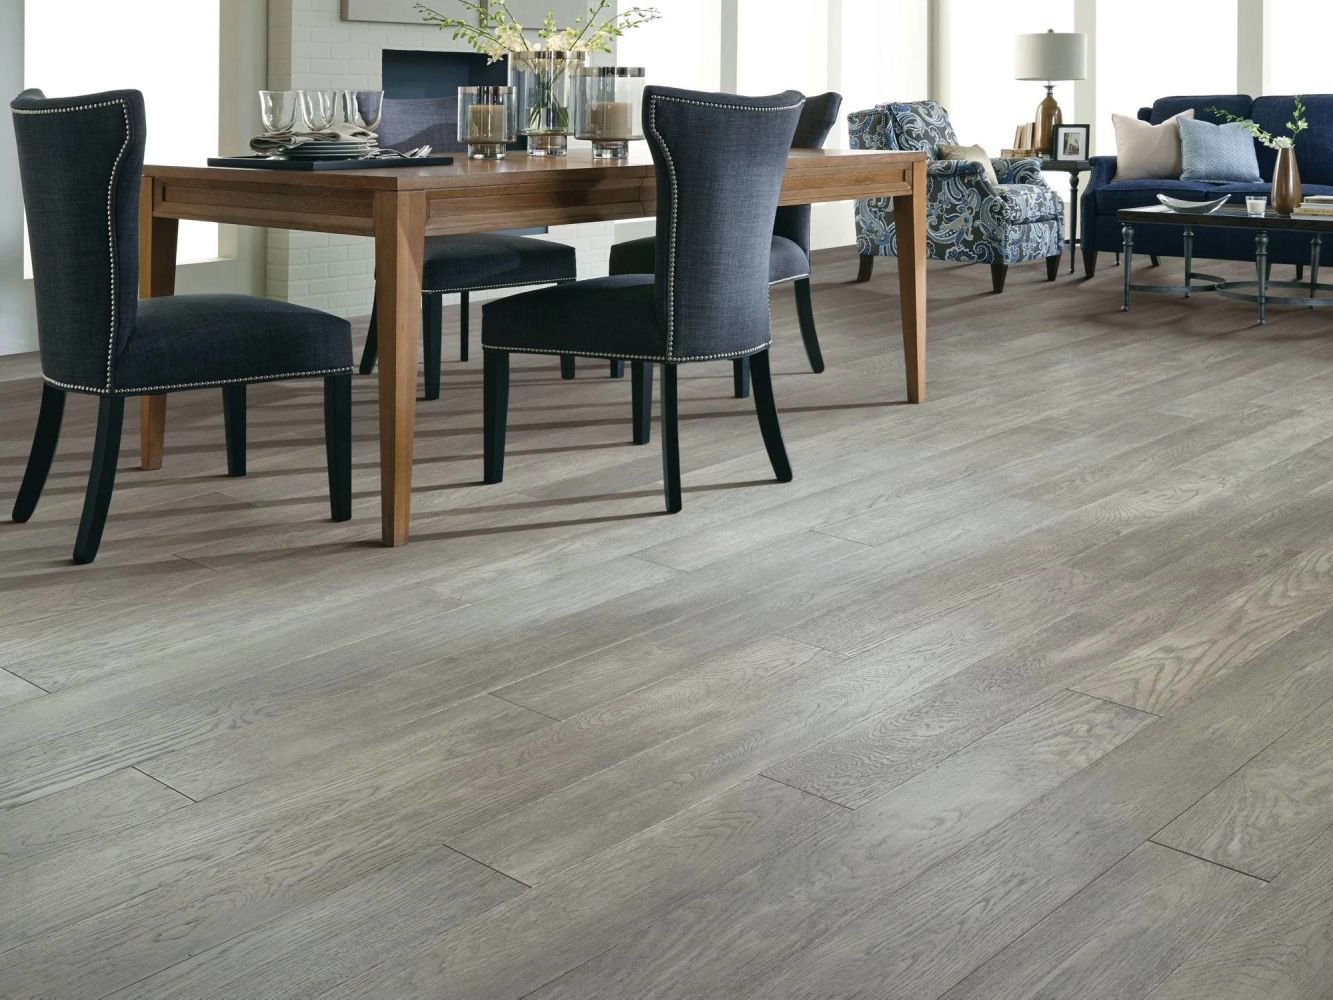 Shaw Floors Carpets Plus Hardwood Destination Anchor Oak Slate 05056_CH916